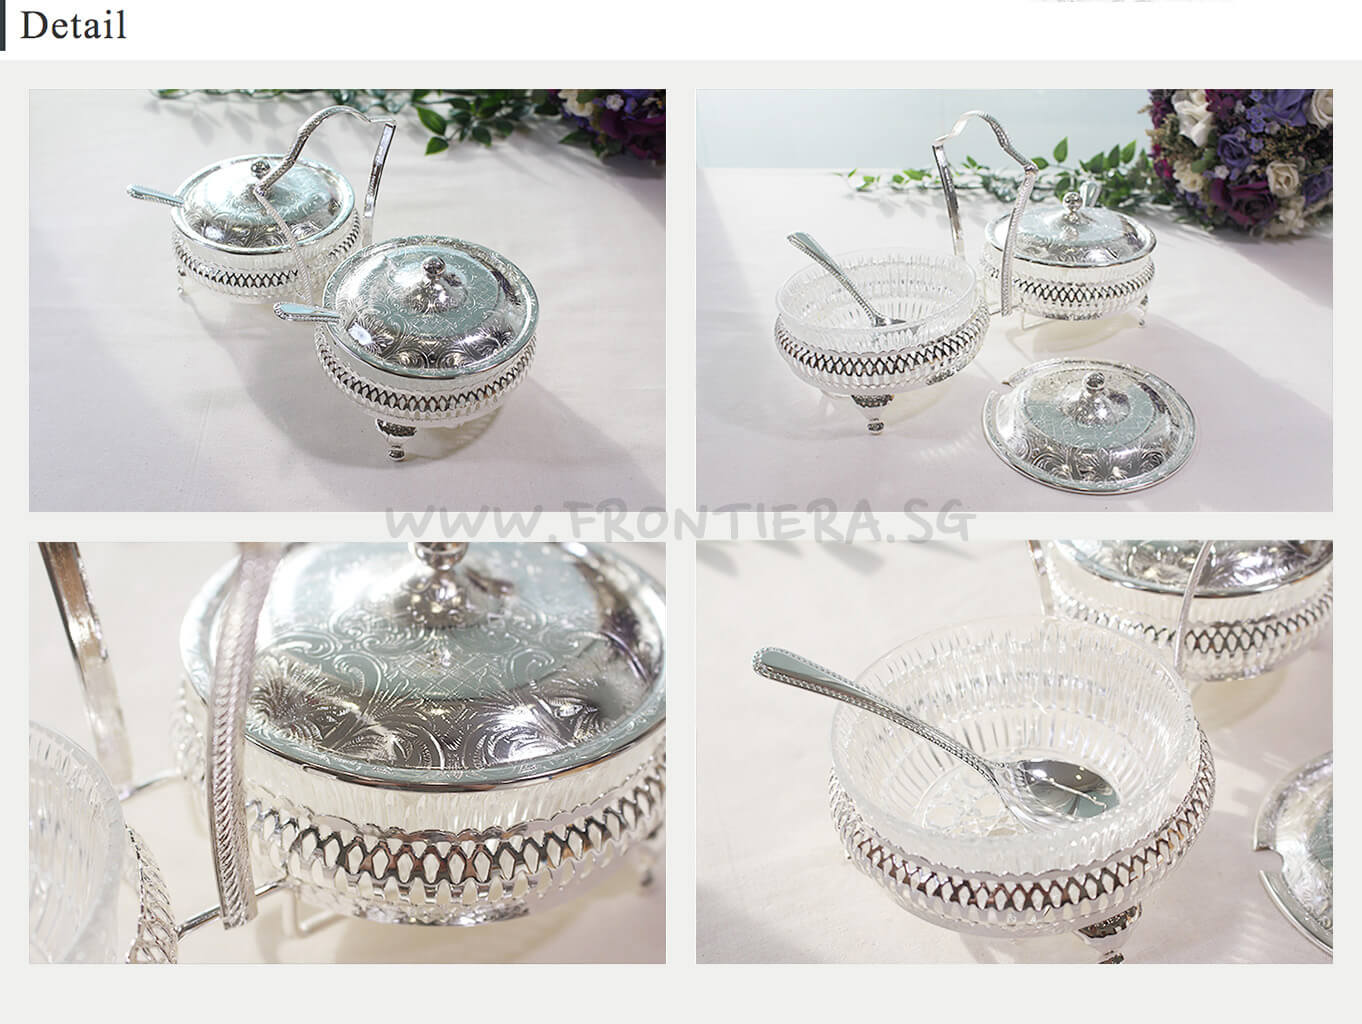 [England Silverware] Double Jam Jar with Lids & 2 Spoons